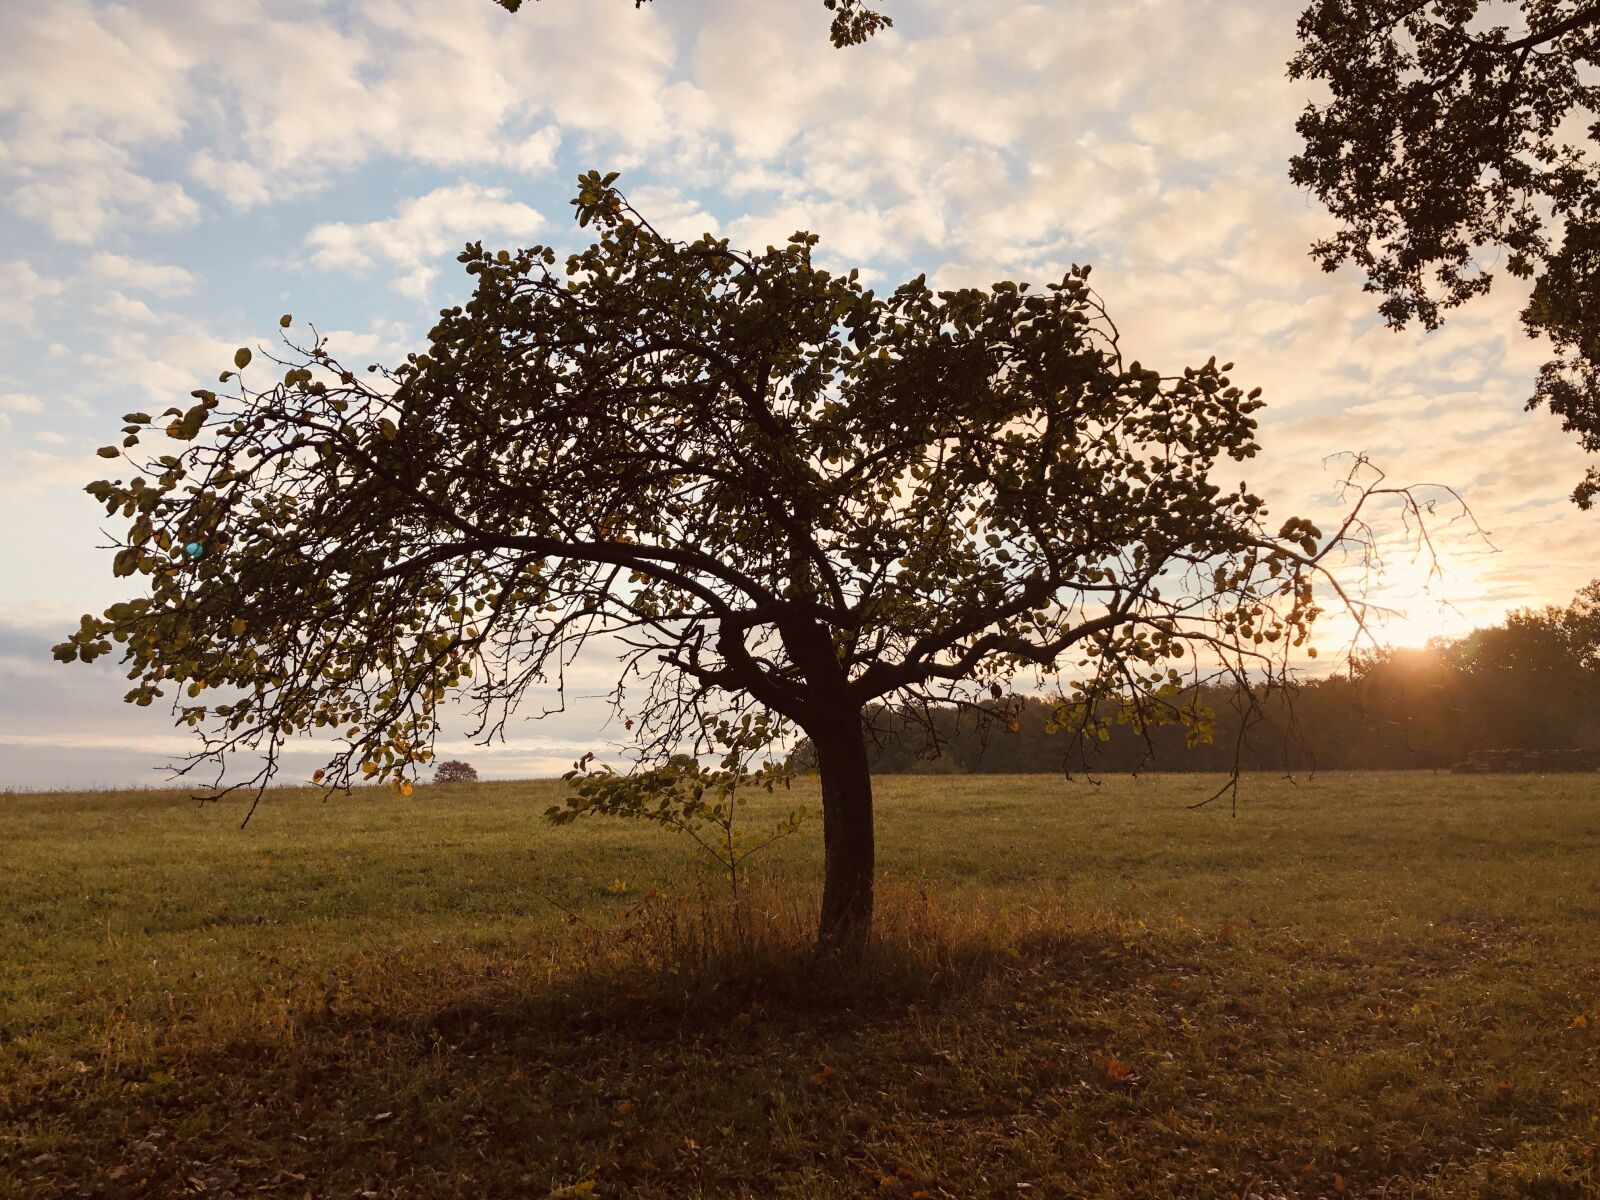 Apple iPhone X + iPhone X back dual camera 4mm f/1.8 sample photo. Tree, sunrise, autumn photography